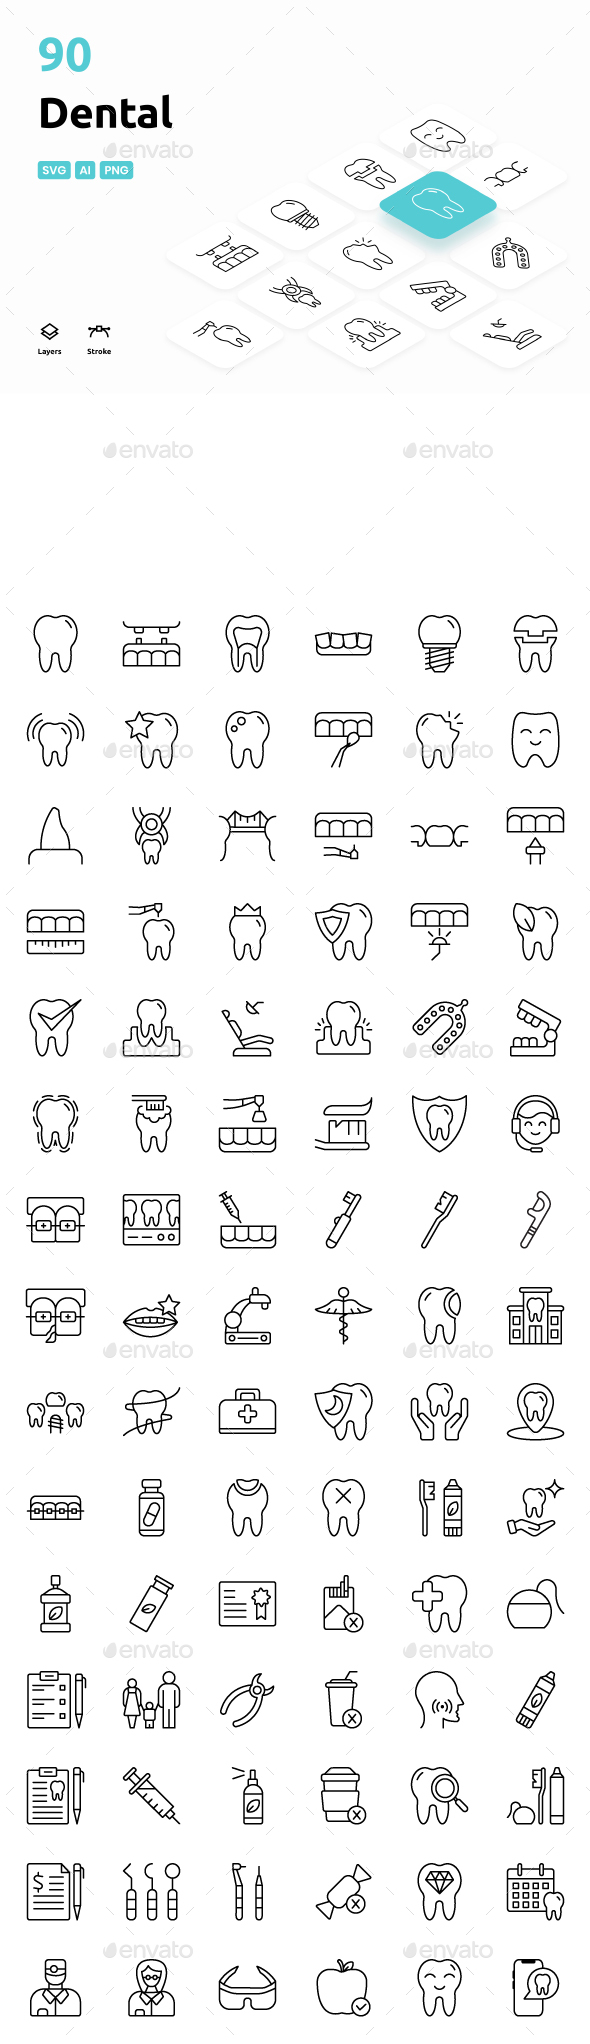 Dental - Icons Pack